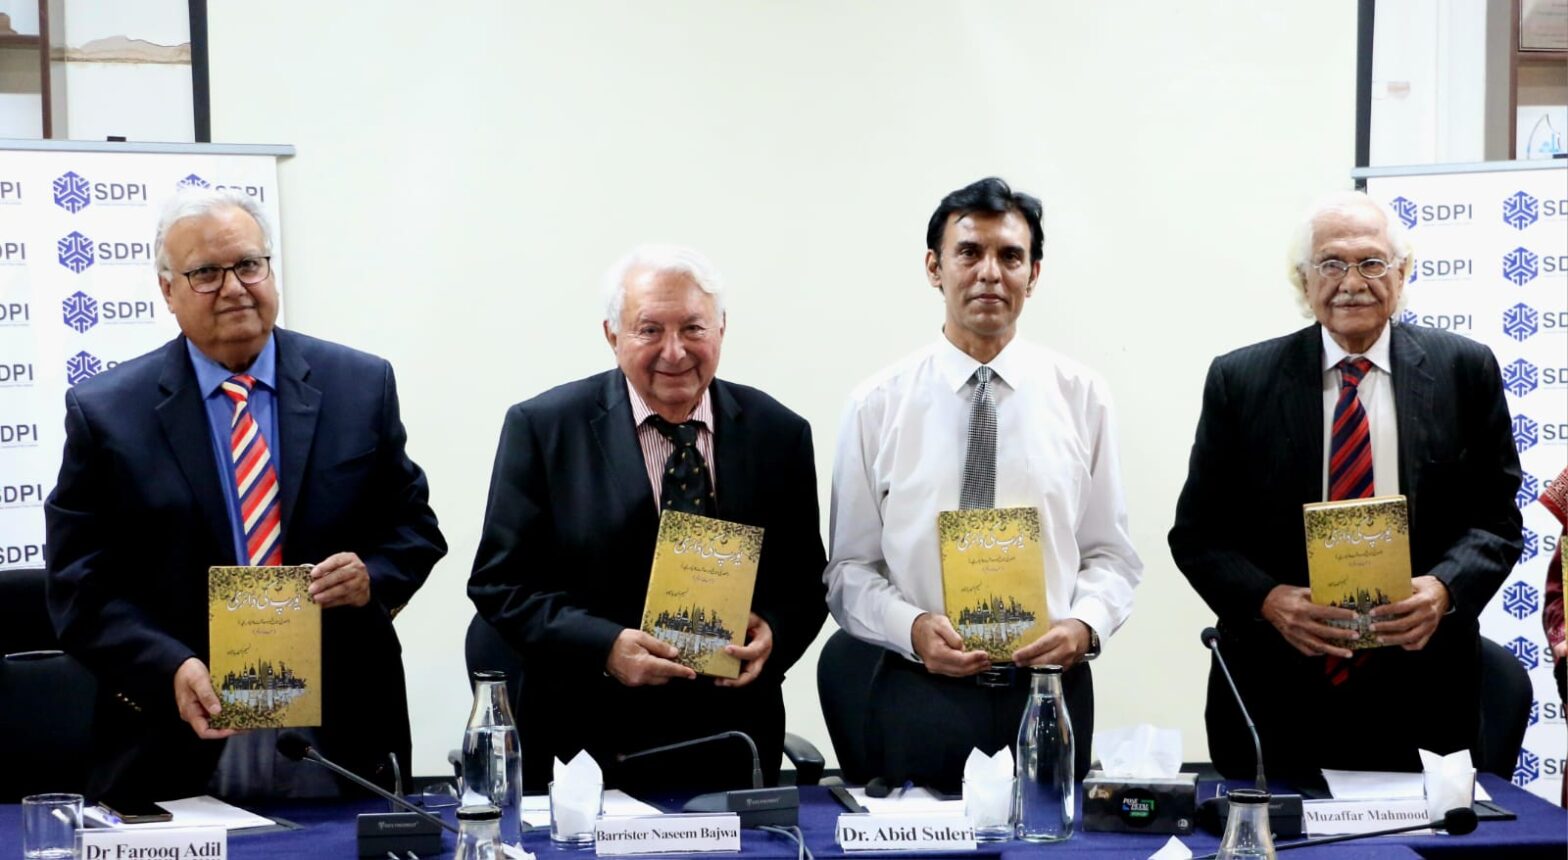 Barrister Naseem Bajwa’s Book "Europe Ki Diary" rekindles passion for national building